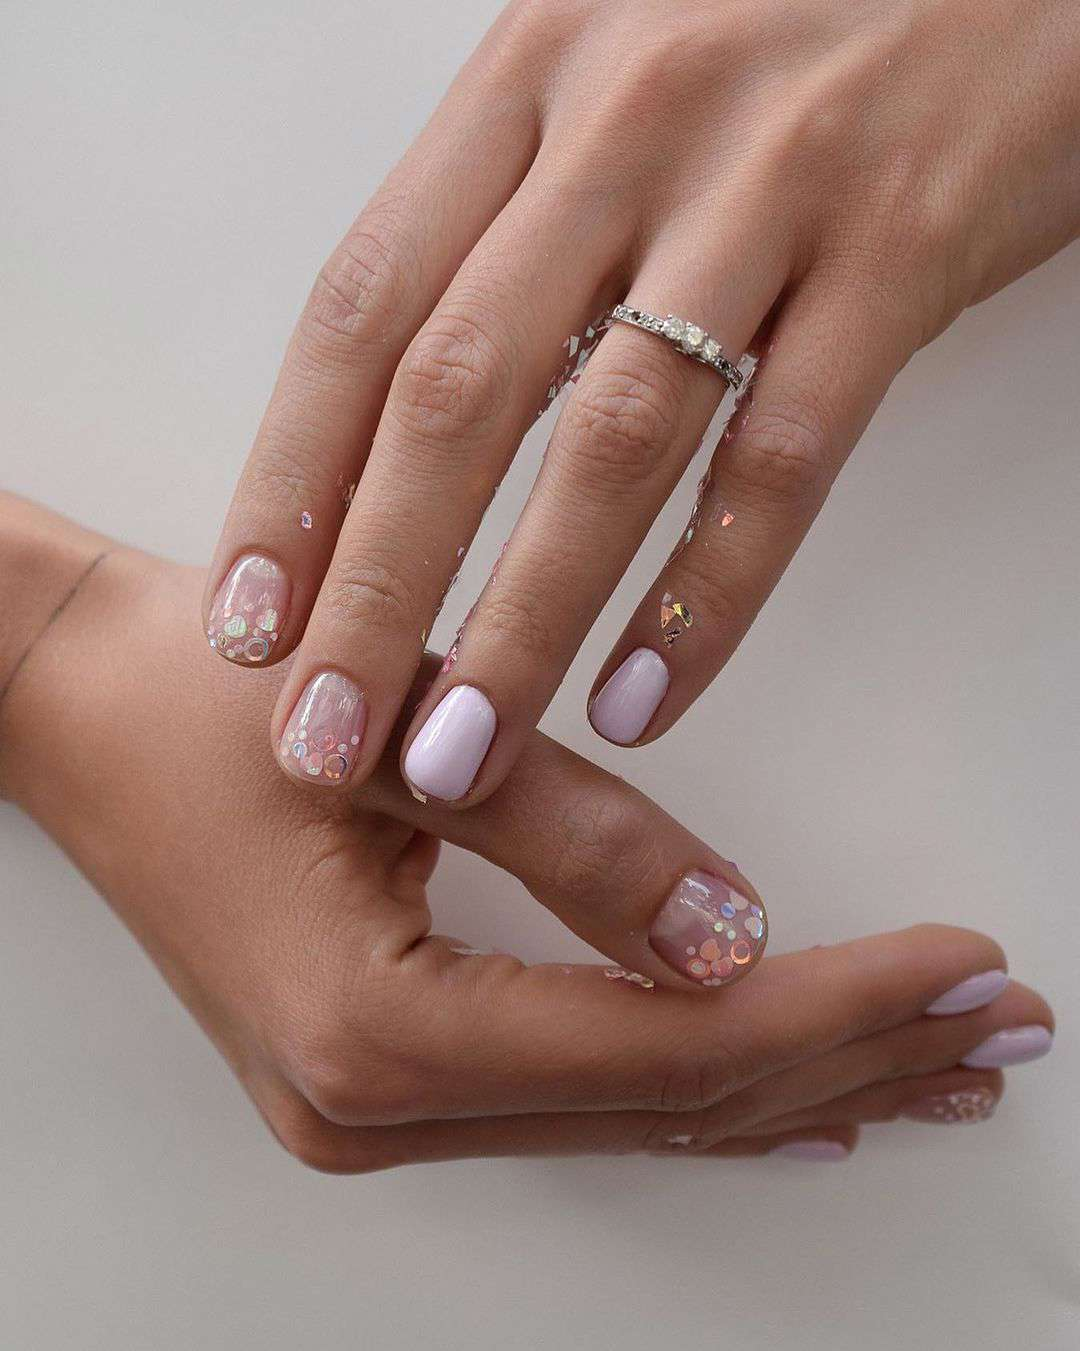 15 uñas permanentes bonitas para inspirarte: con glitter